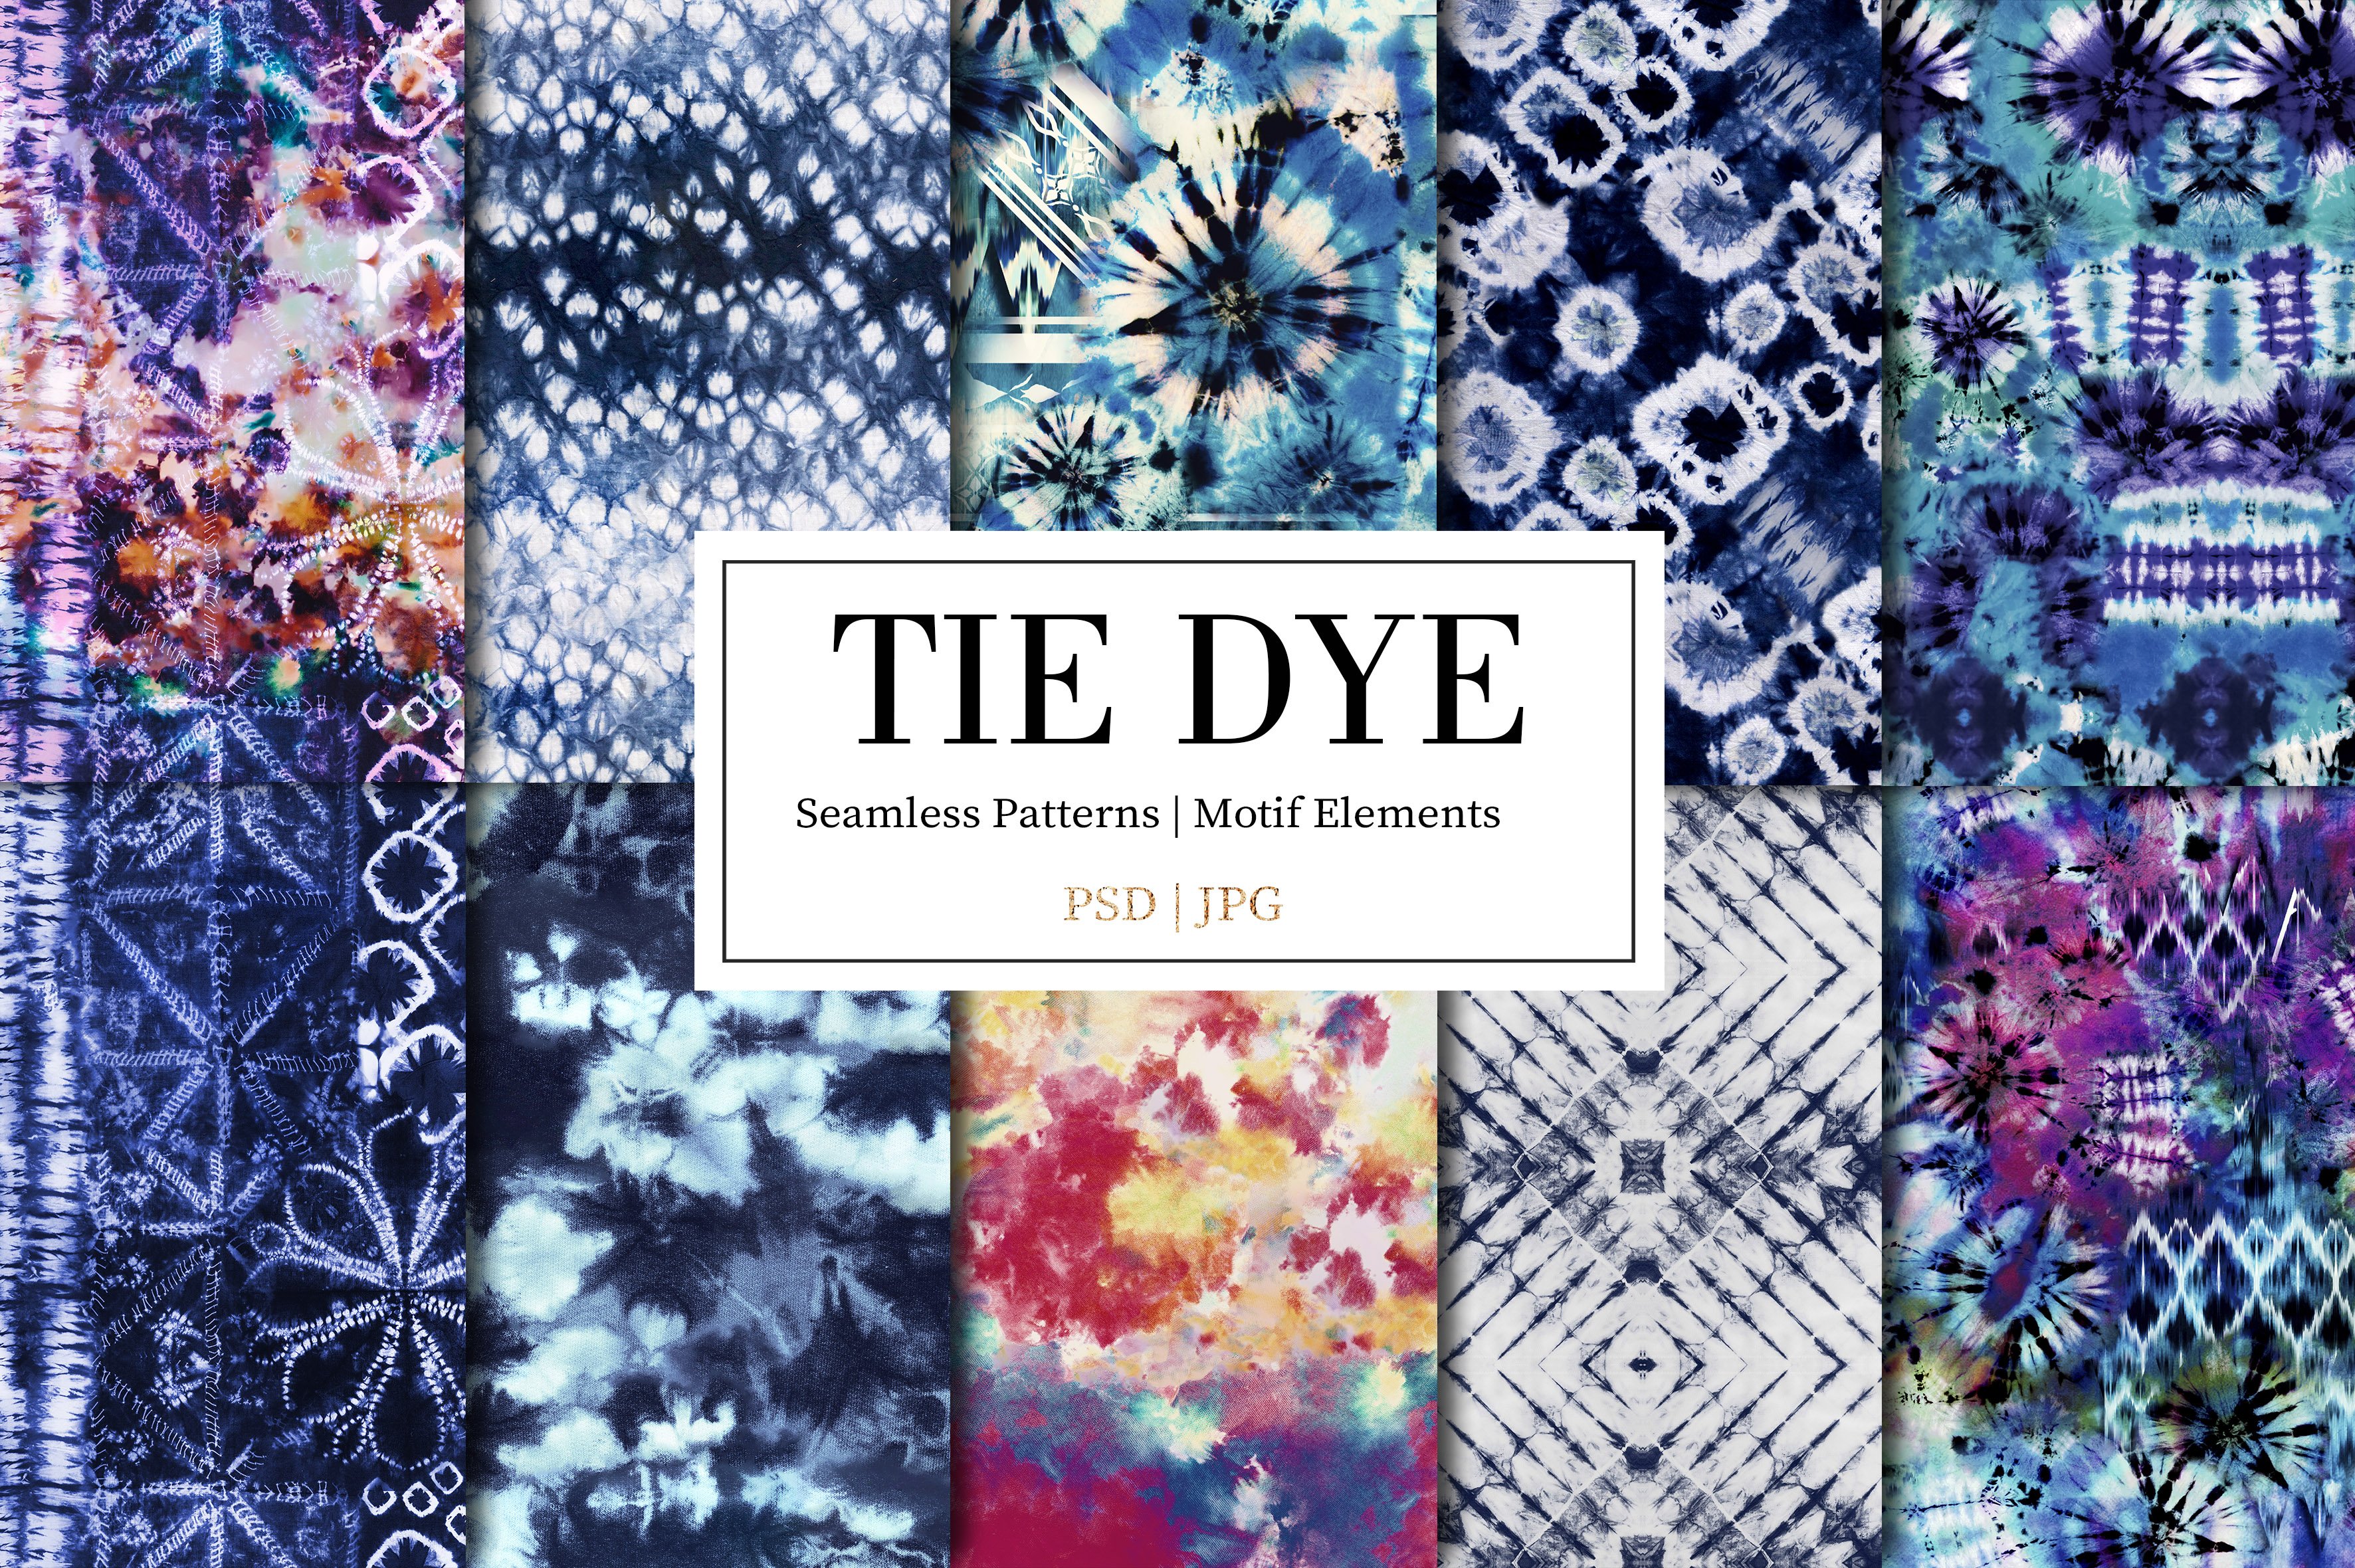 Tie Dye | Seamless Shibori cover image.